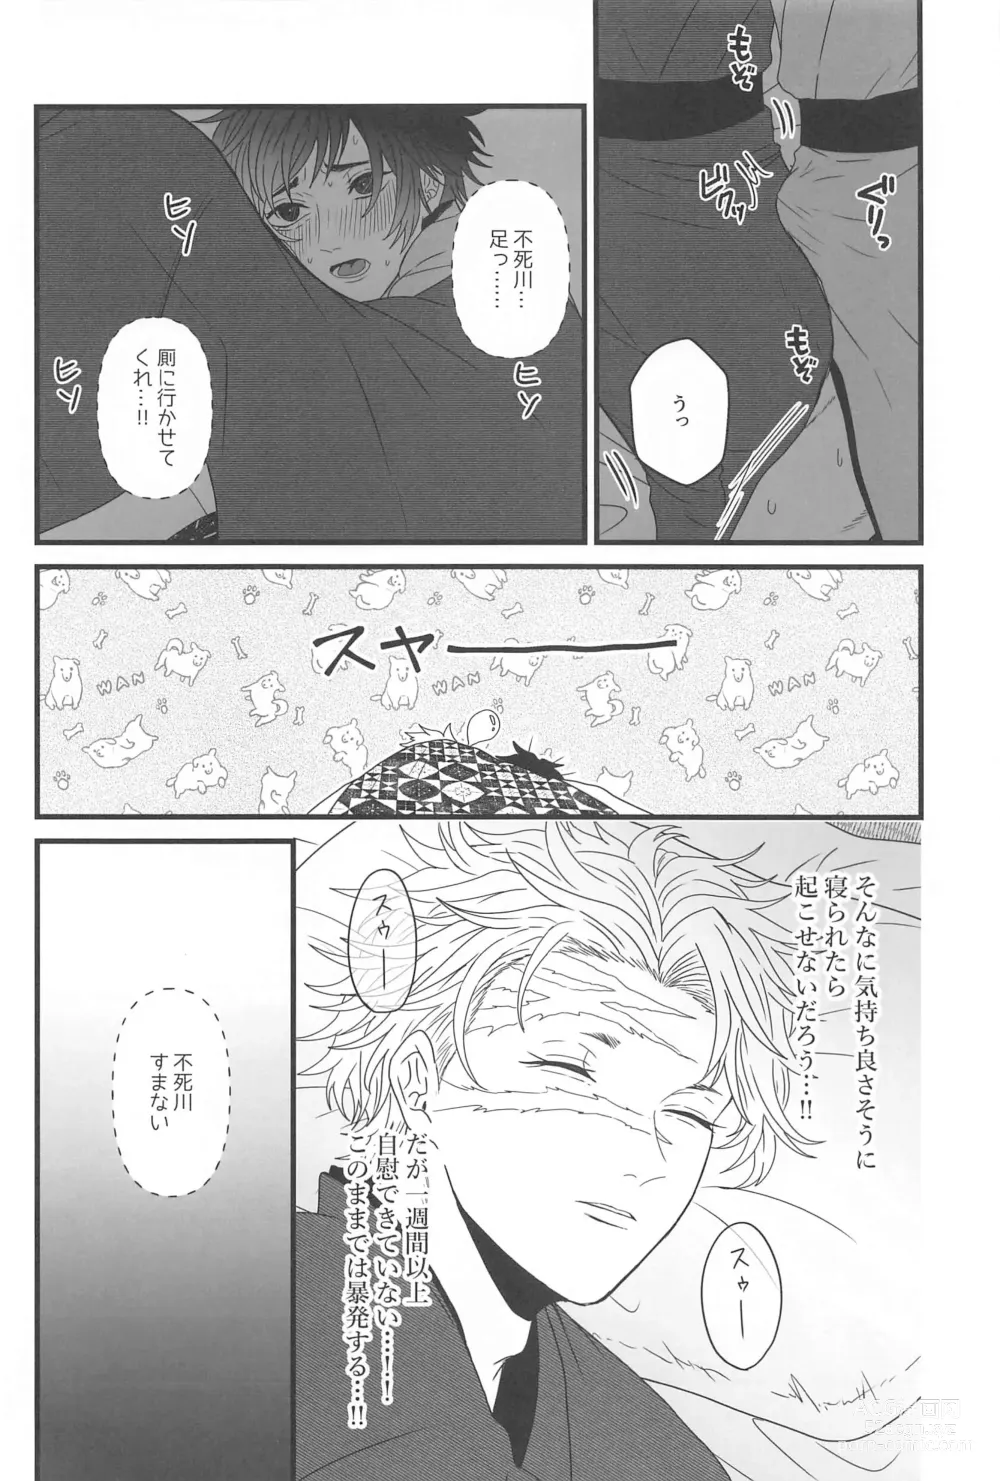 Page 13 of doujinshi Hiruma no Hoshi o Sagashite - Looking for stars in the daytime